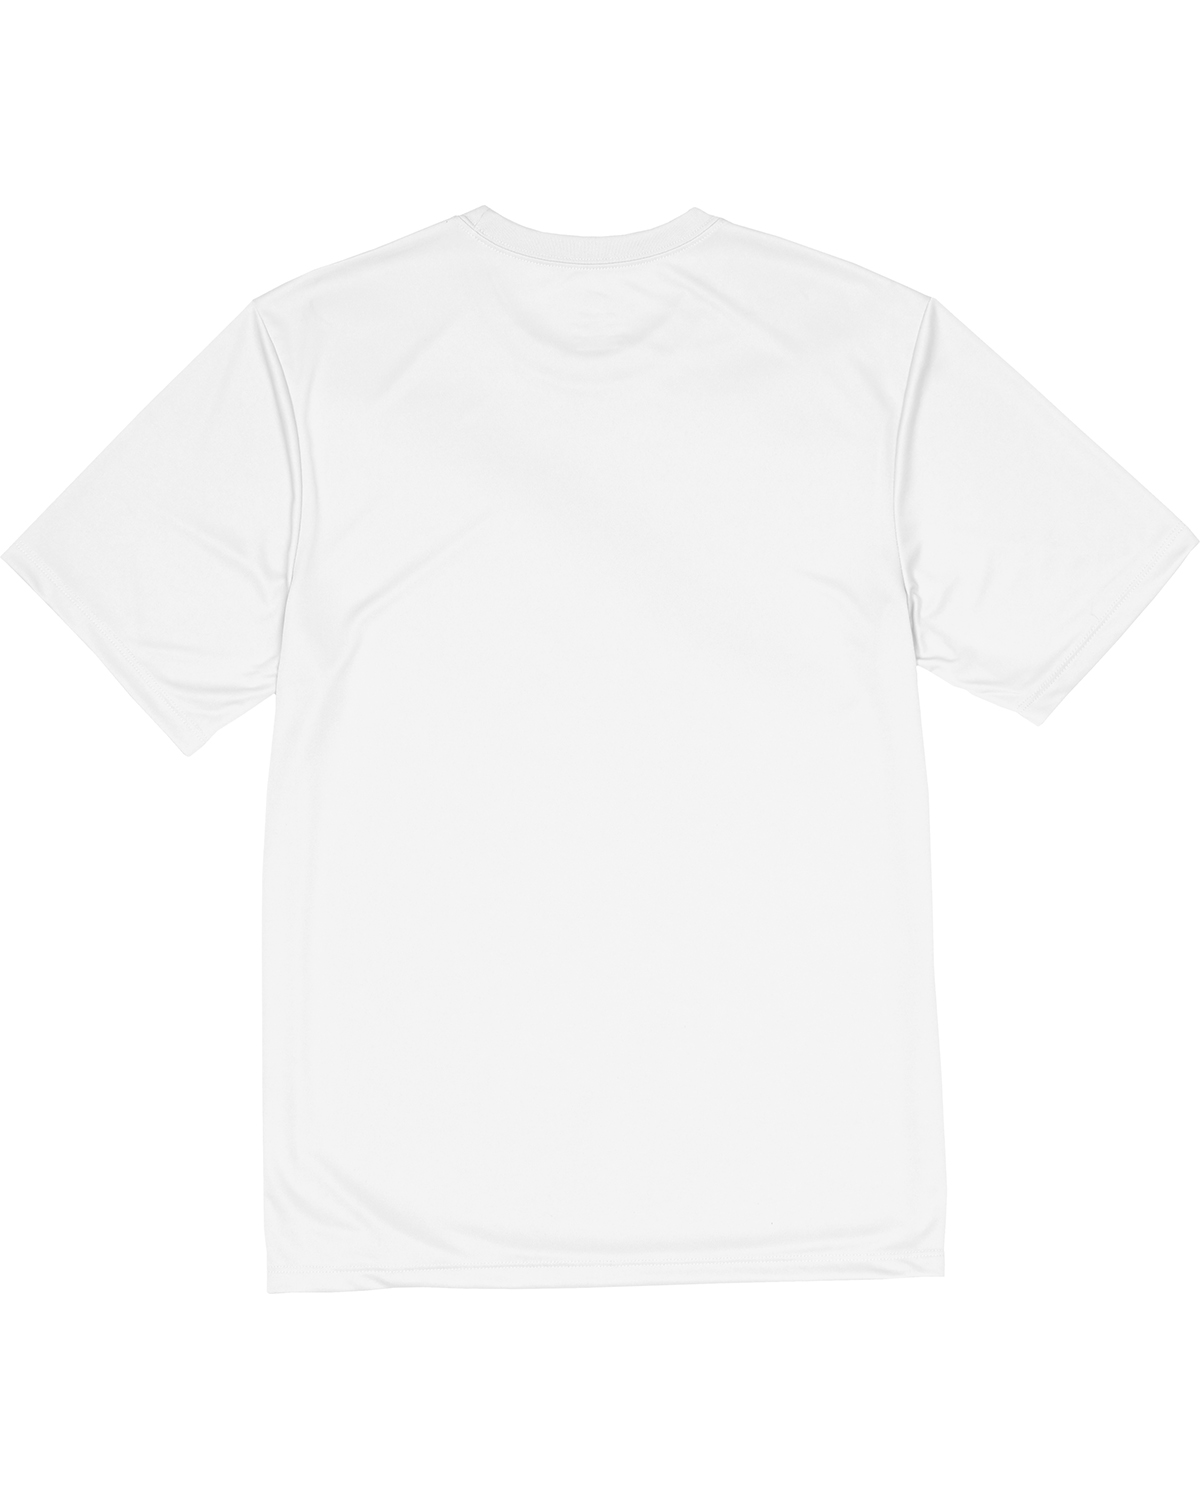 Hanes 4820 Cool Dri Performance Short Sleeve T-Shirt